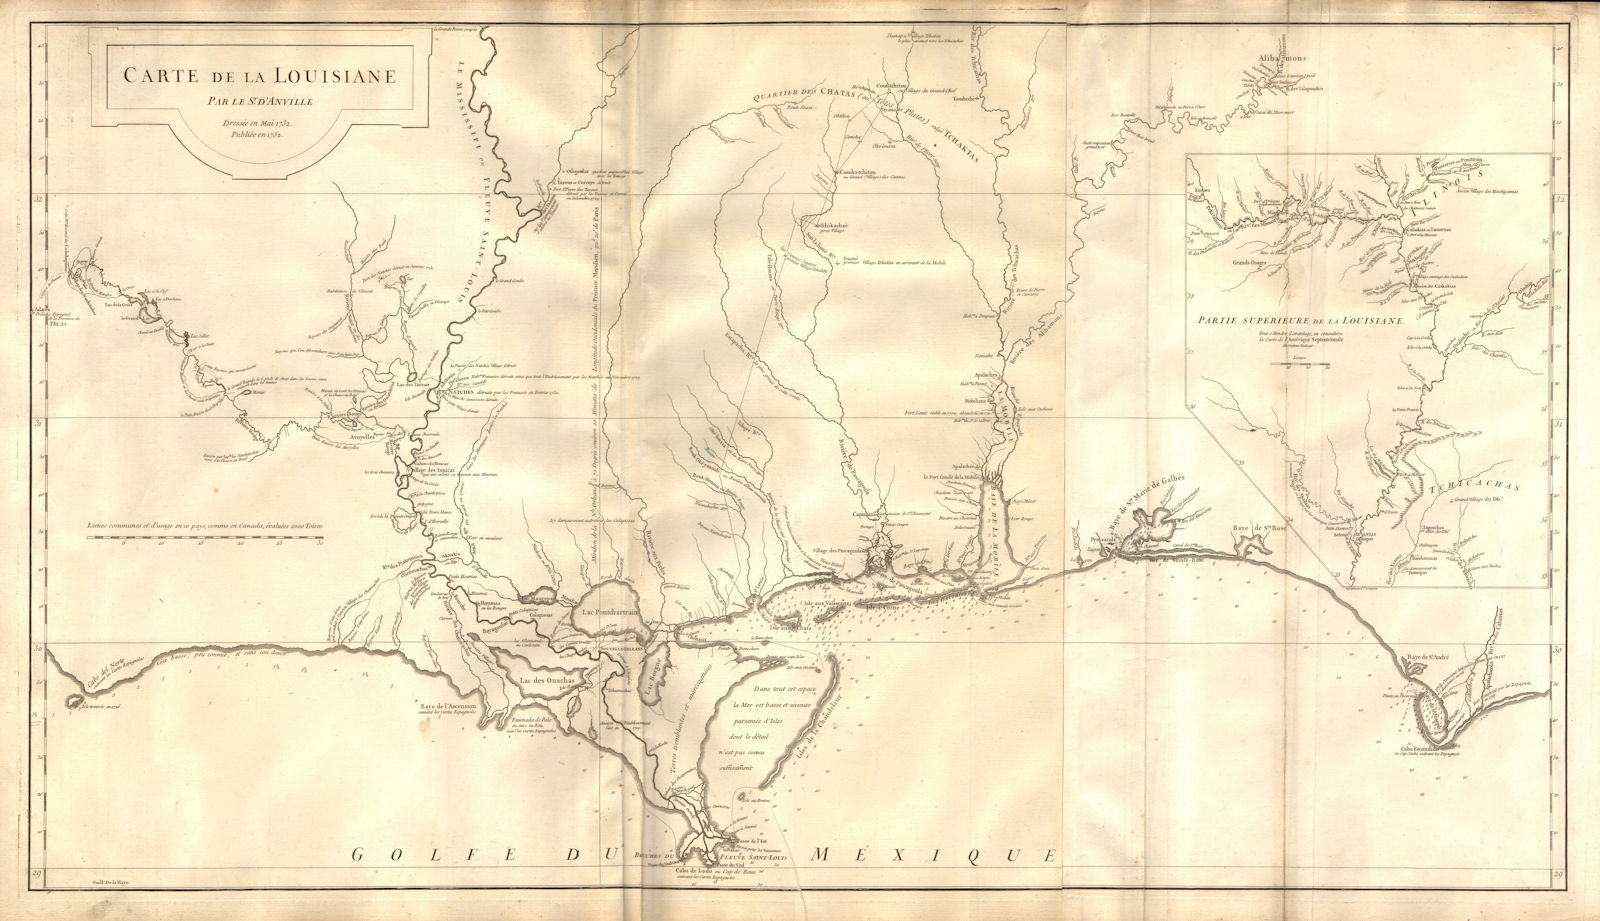 'Carte de la Louisiane'. French forts/missions. Gulf Coast. D’ANVILLE 1752 map